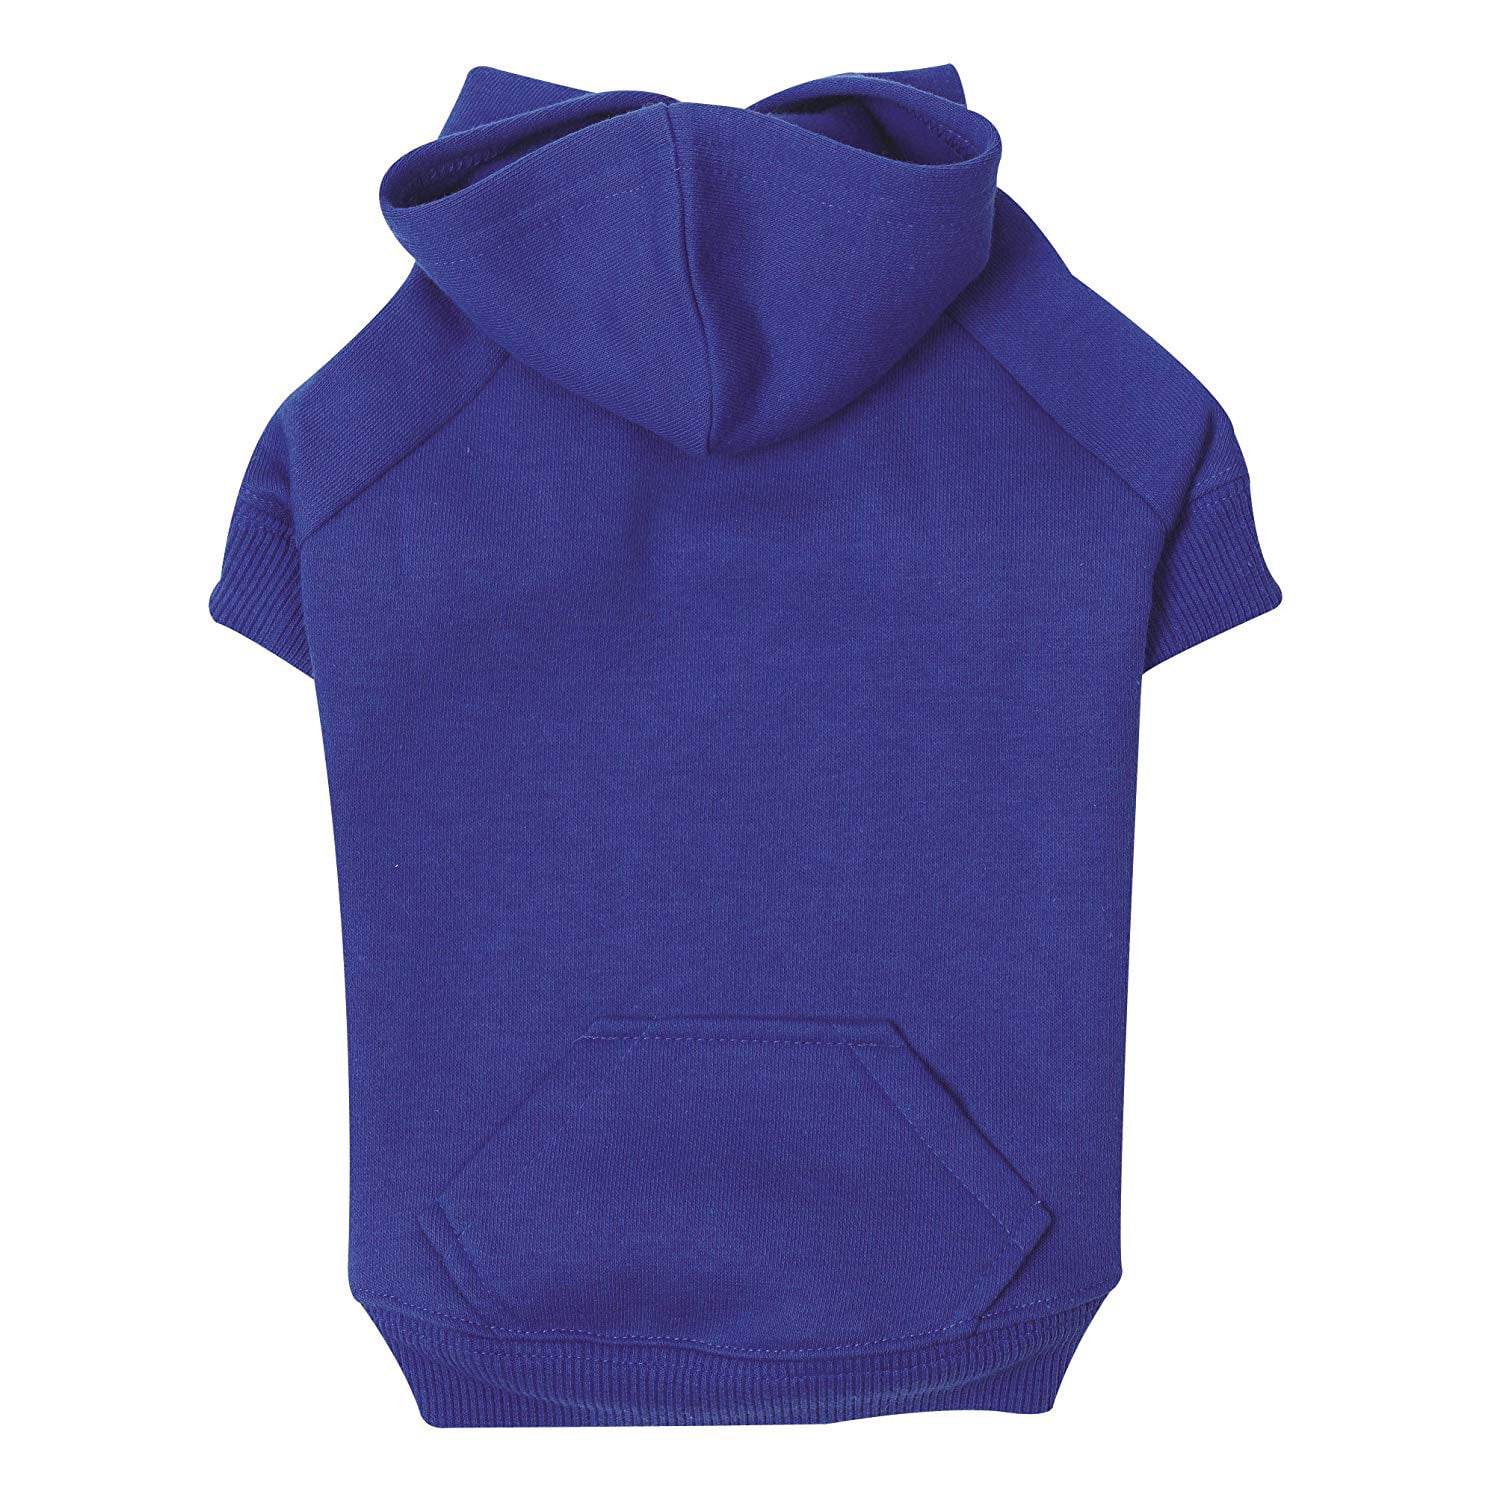 USA Seller ZACK & ZOEY HOODIE 6 Sizes Basic Dog Puppy Sweatshirt Shirt Sweater 